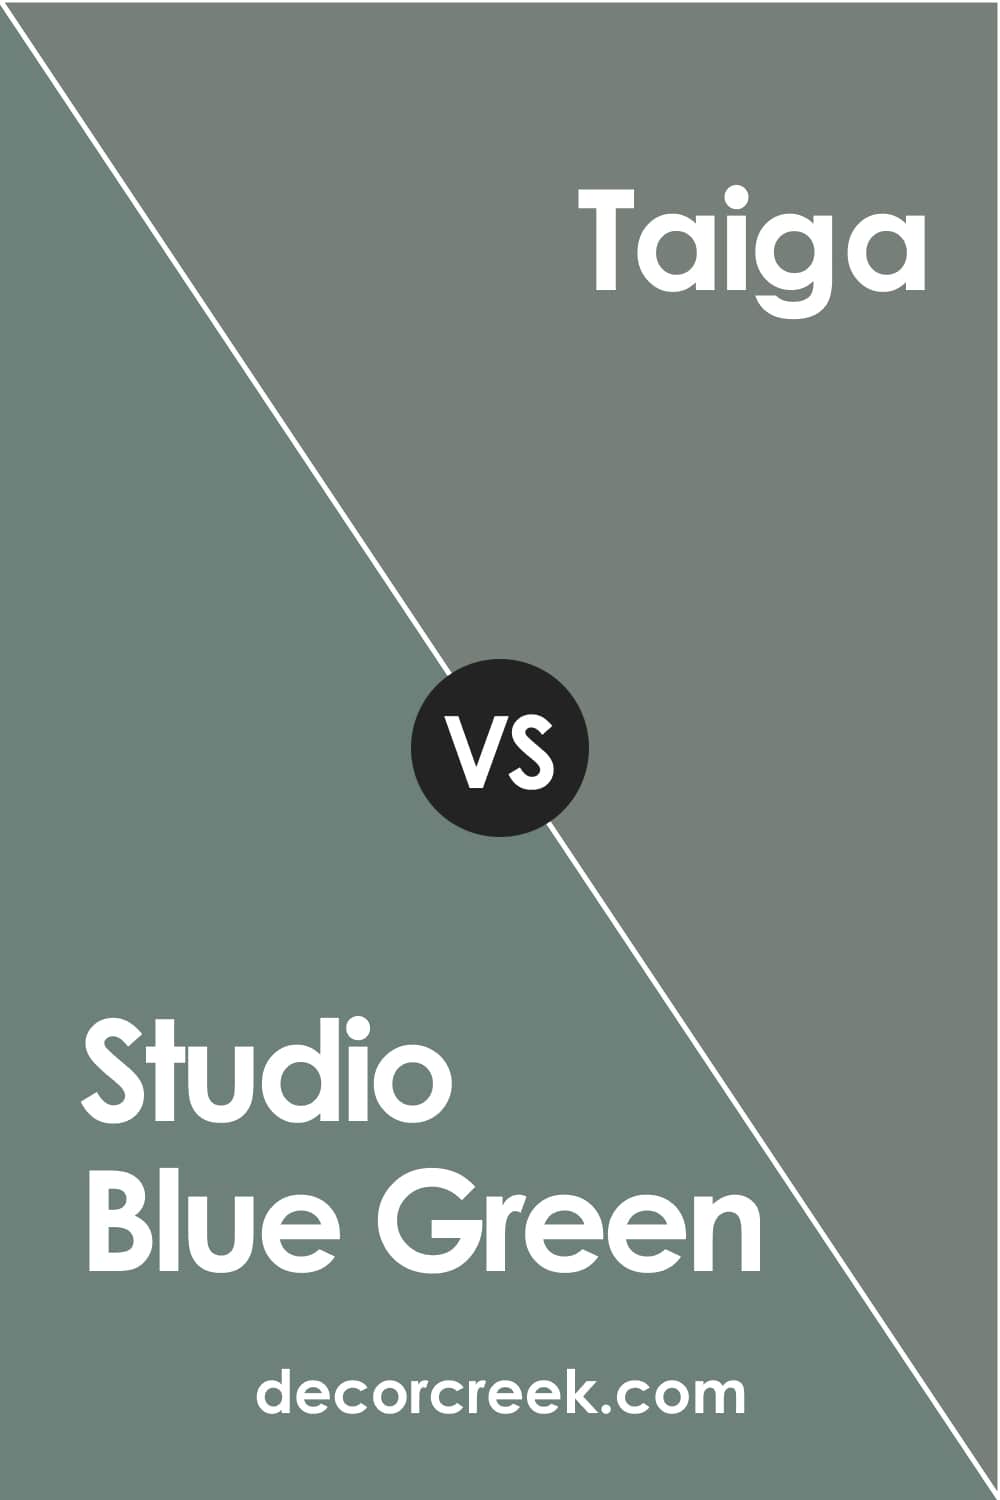 Studio Blue Green vs Taiga